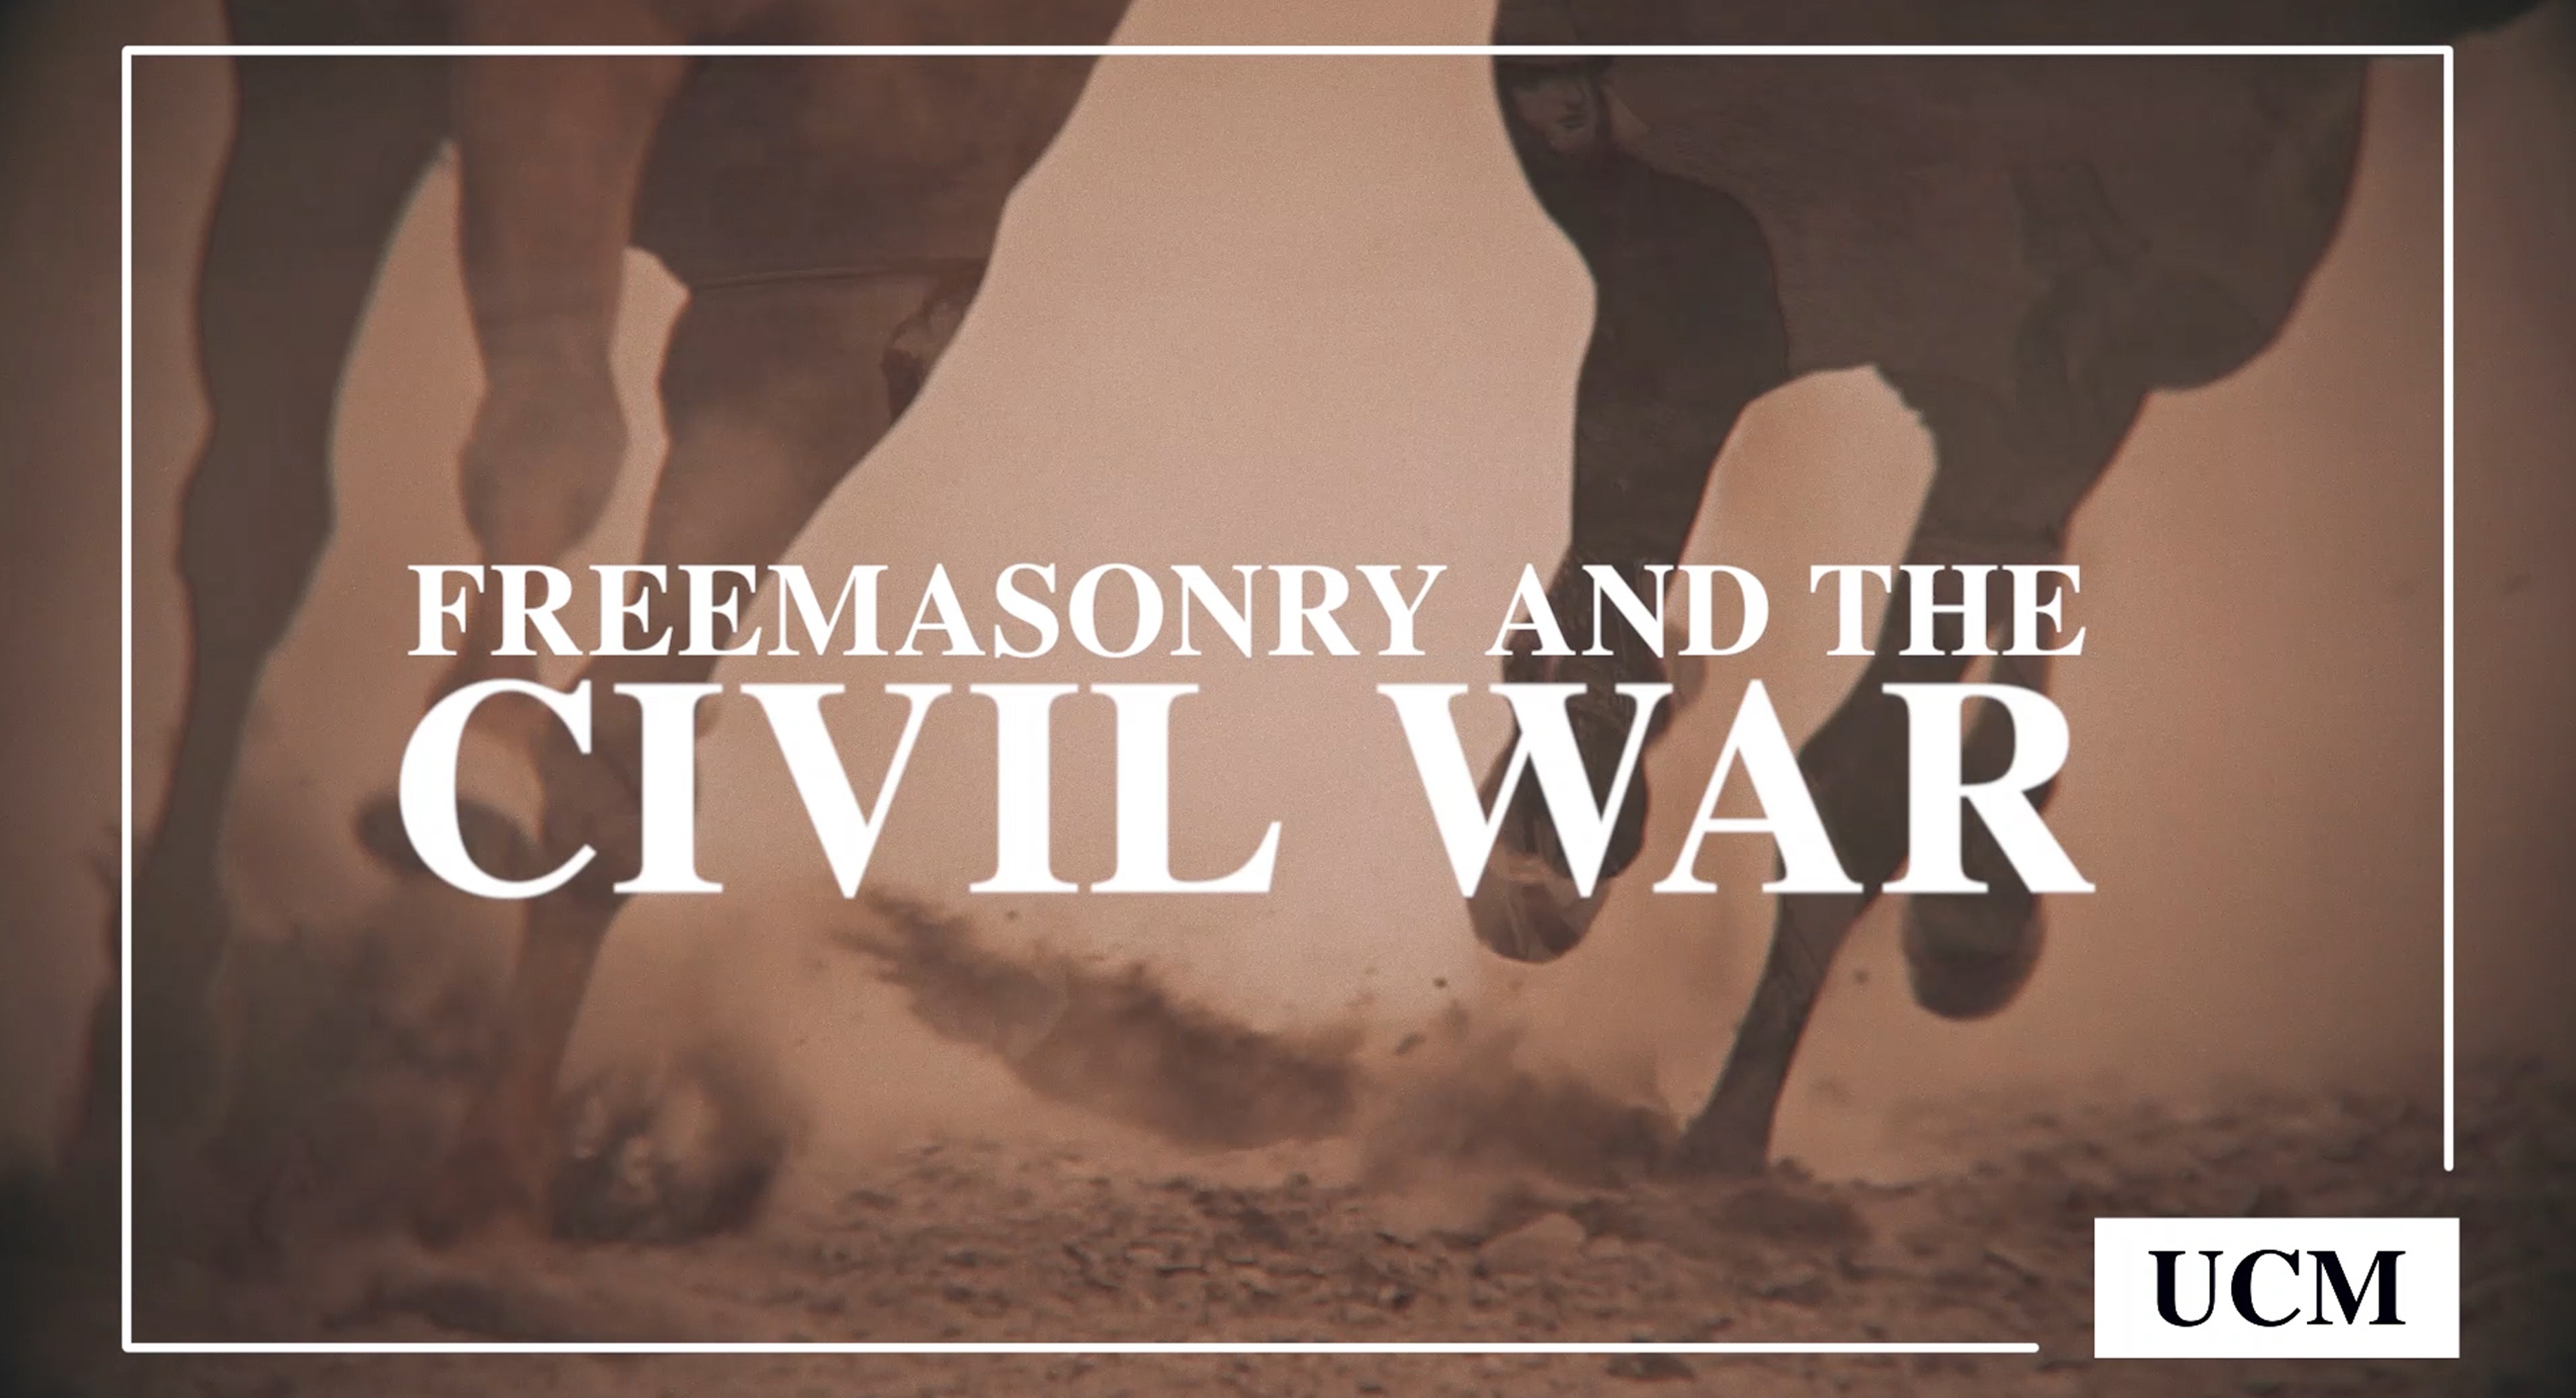 Freemasonry and the Civil War